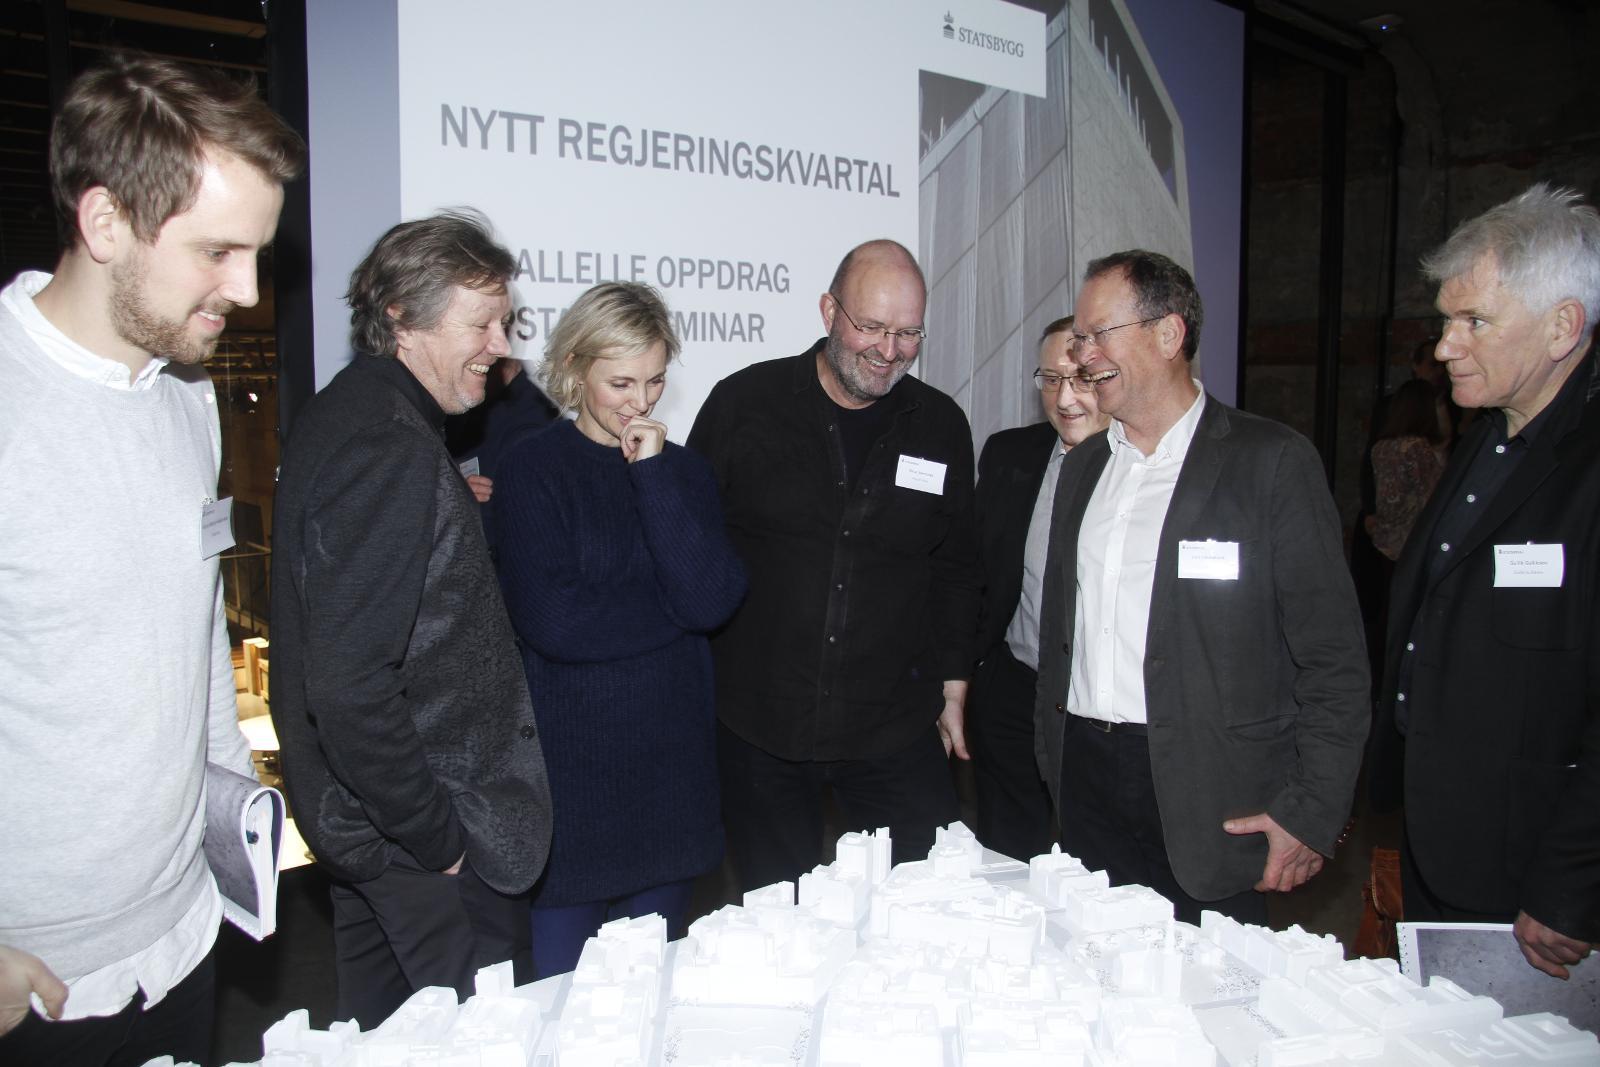 Teamene som skal forme det nye regjeringskvartalet var i går samlet. Først besøkte de Høyblokken, før de fortsatte på Norsk Design- og arkitektursenter. 